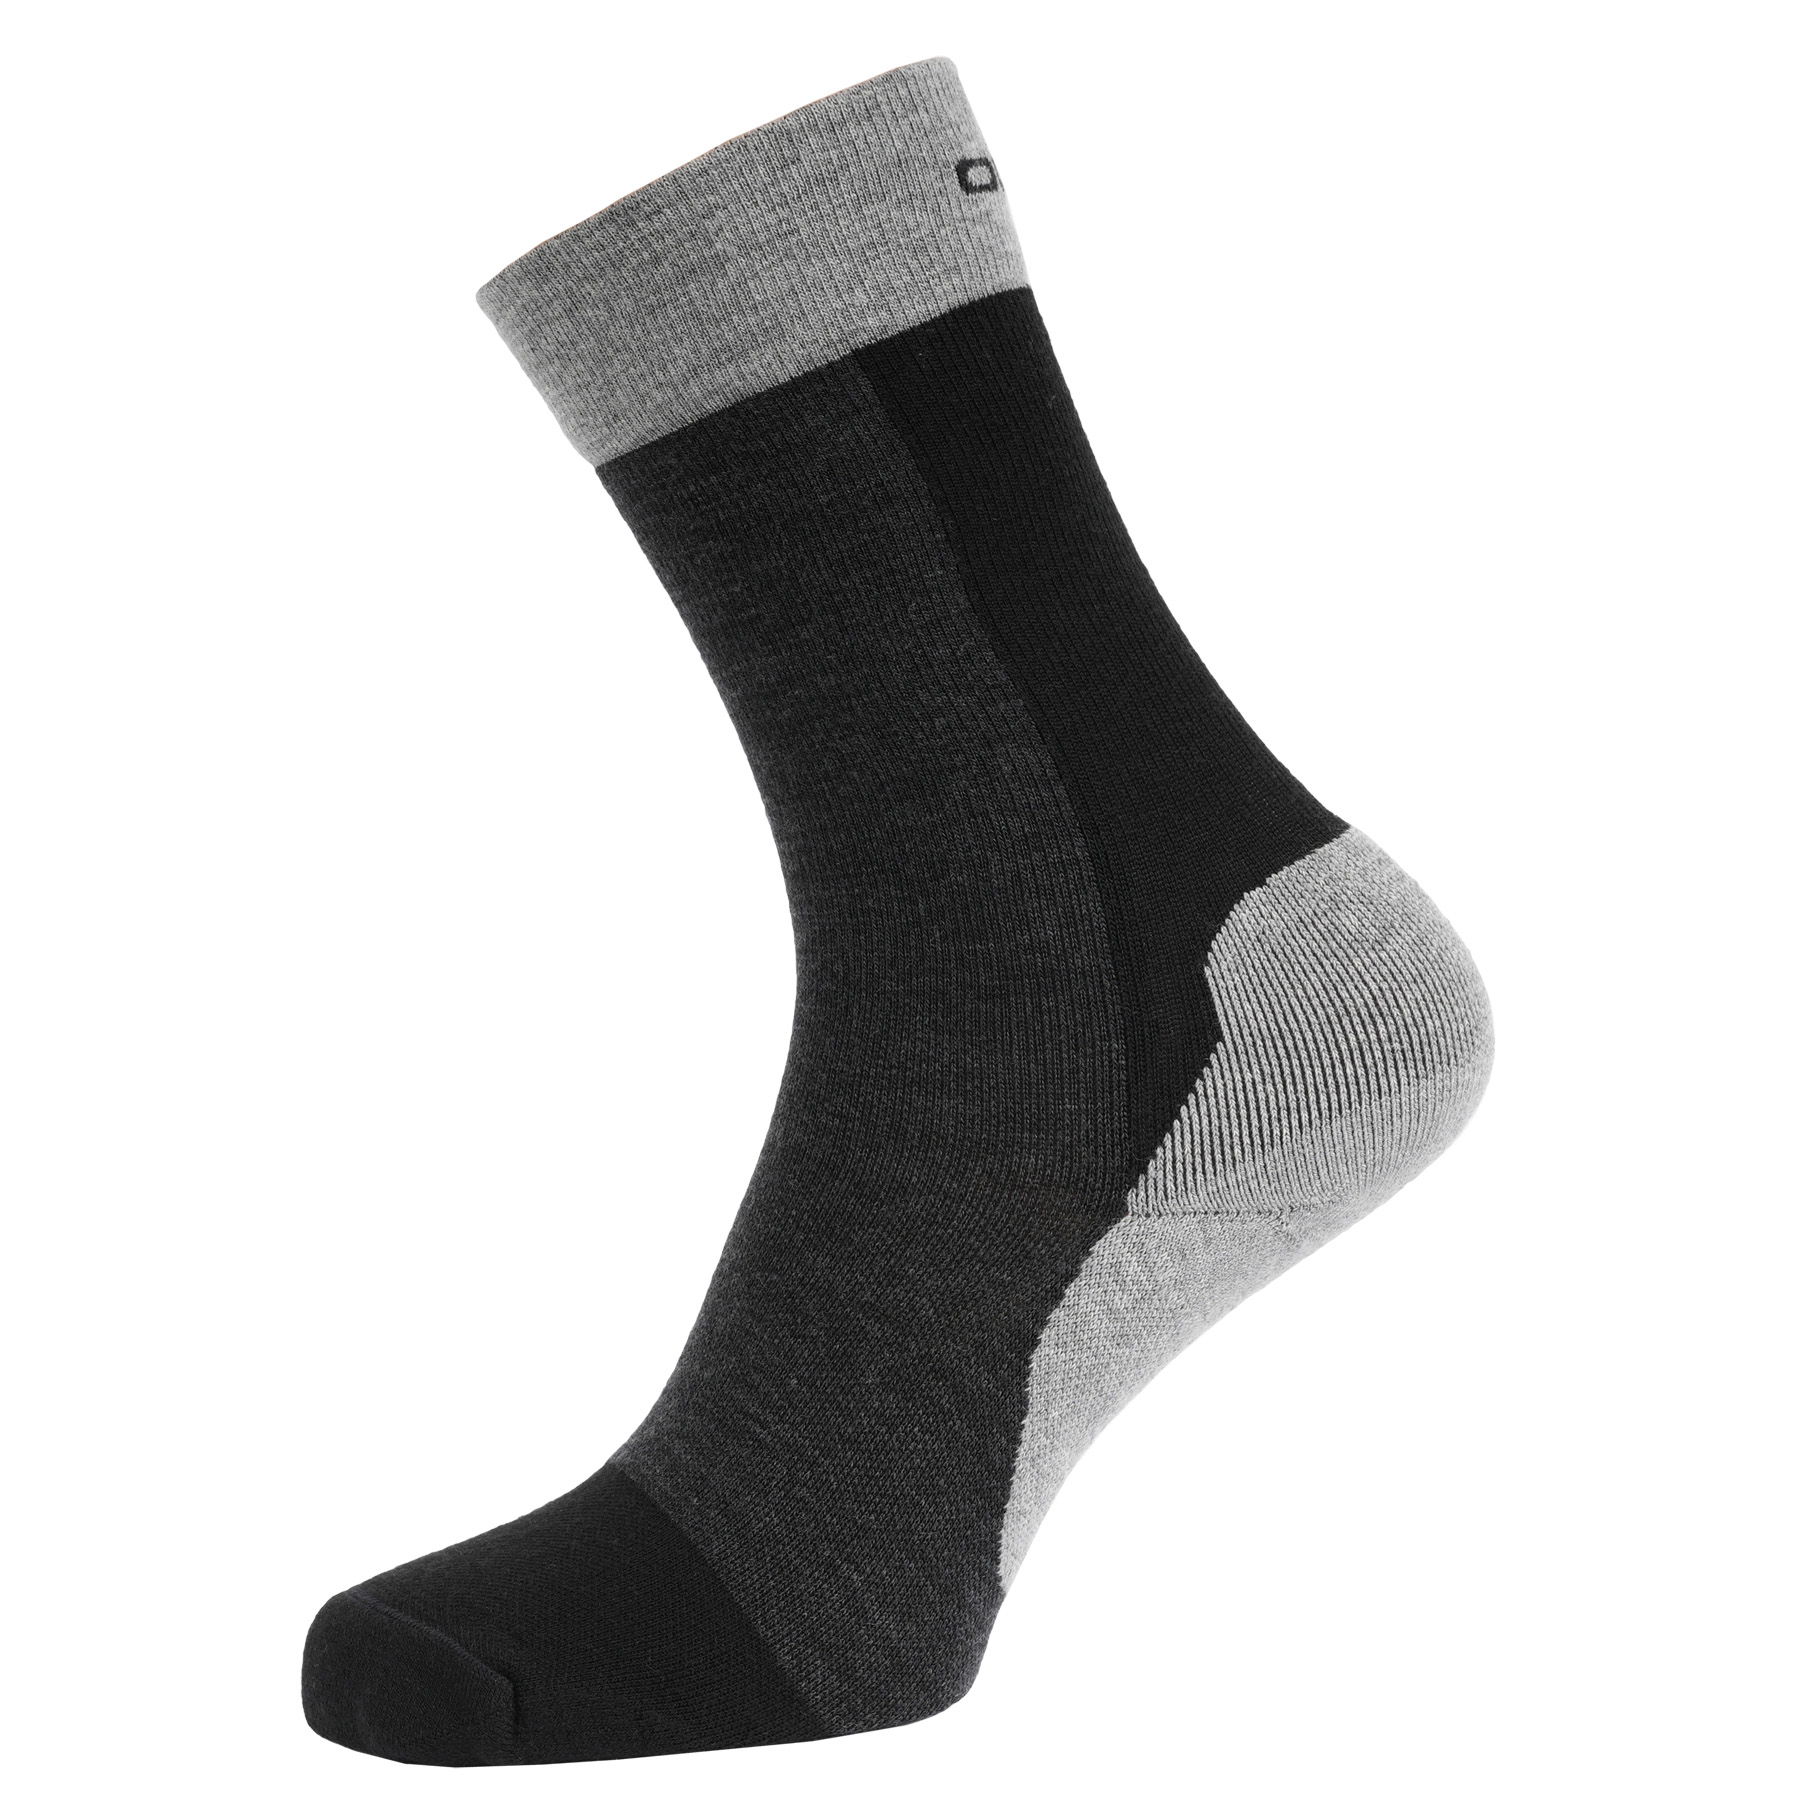 Picture of Odlo Performance Wool Crew Hiking Socks - black - new odlo graphite grey